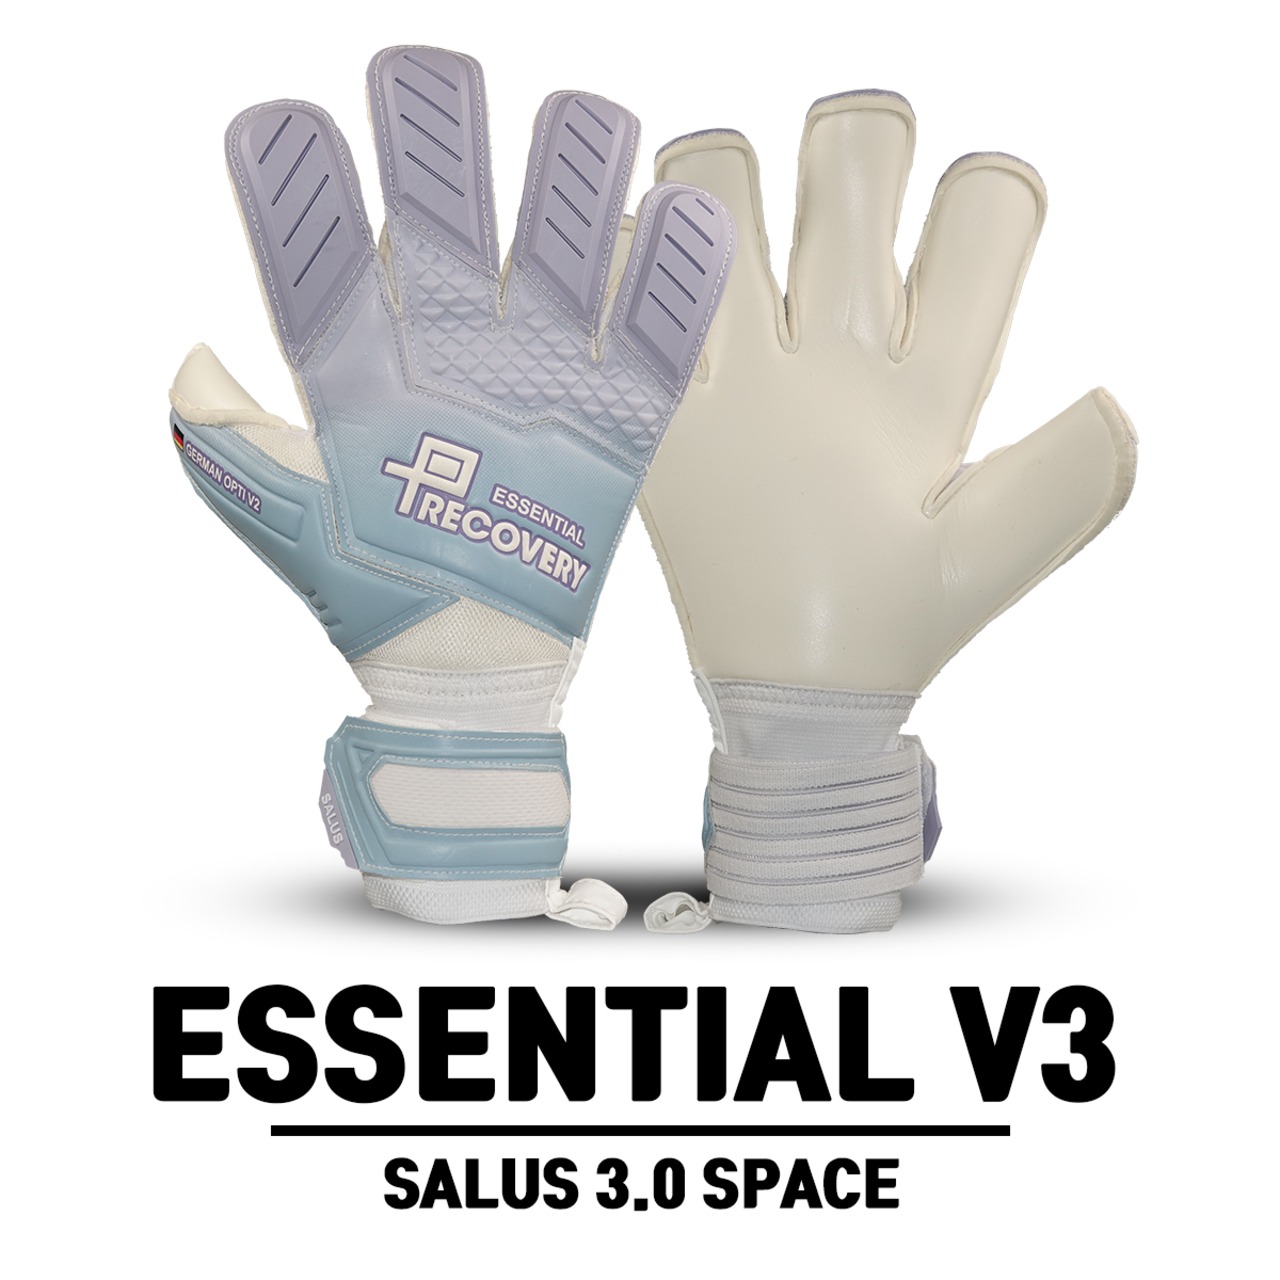 SALUS 3.0 ESSENTIAL V3 SPACE